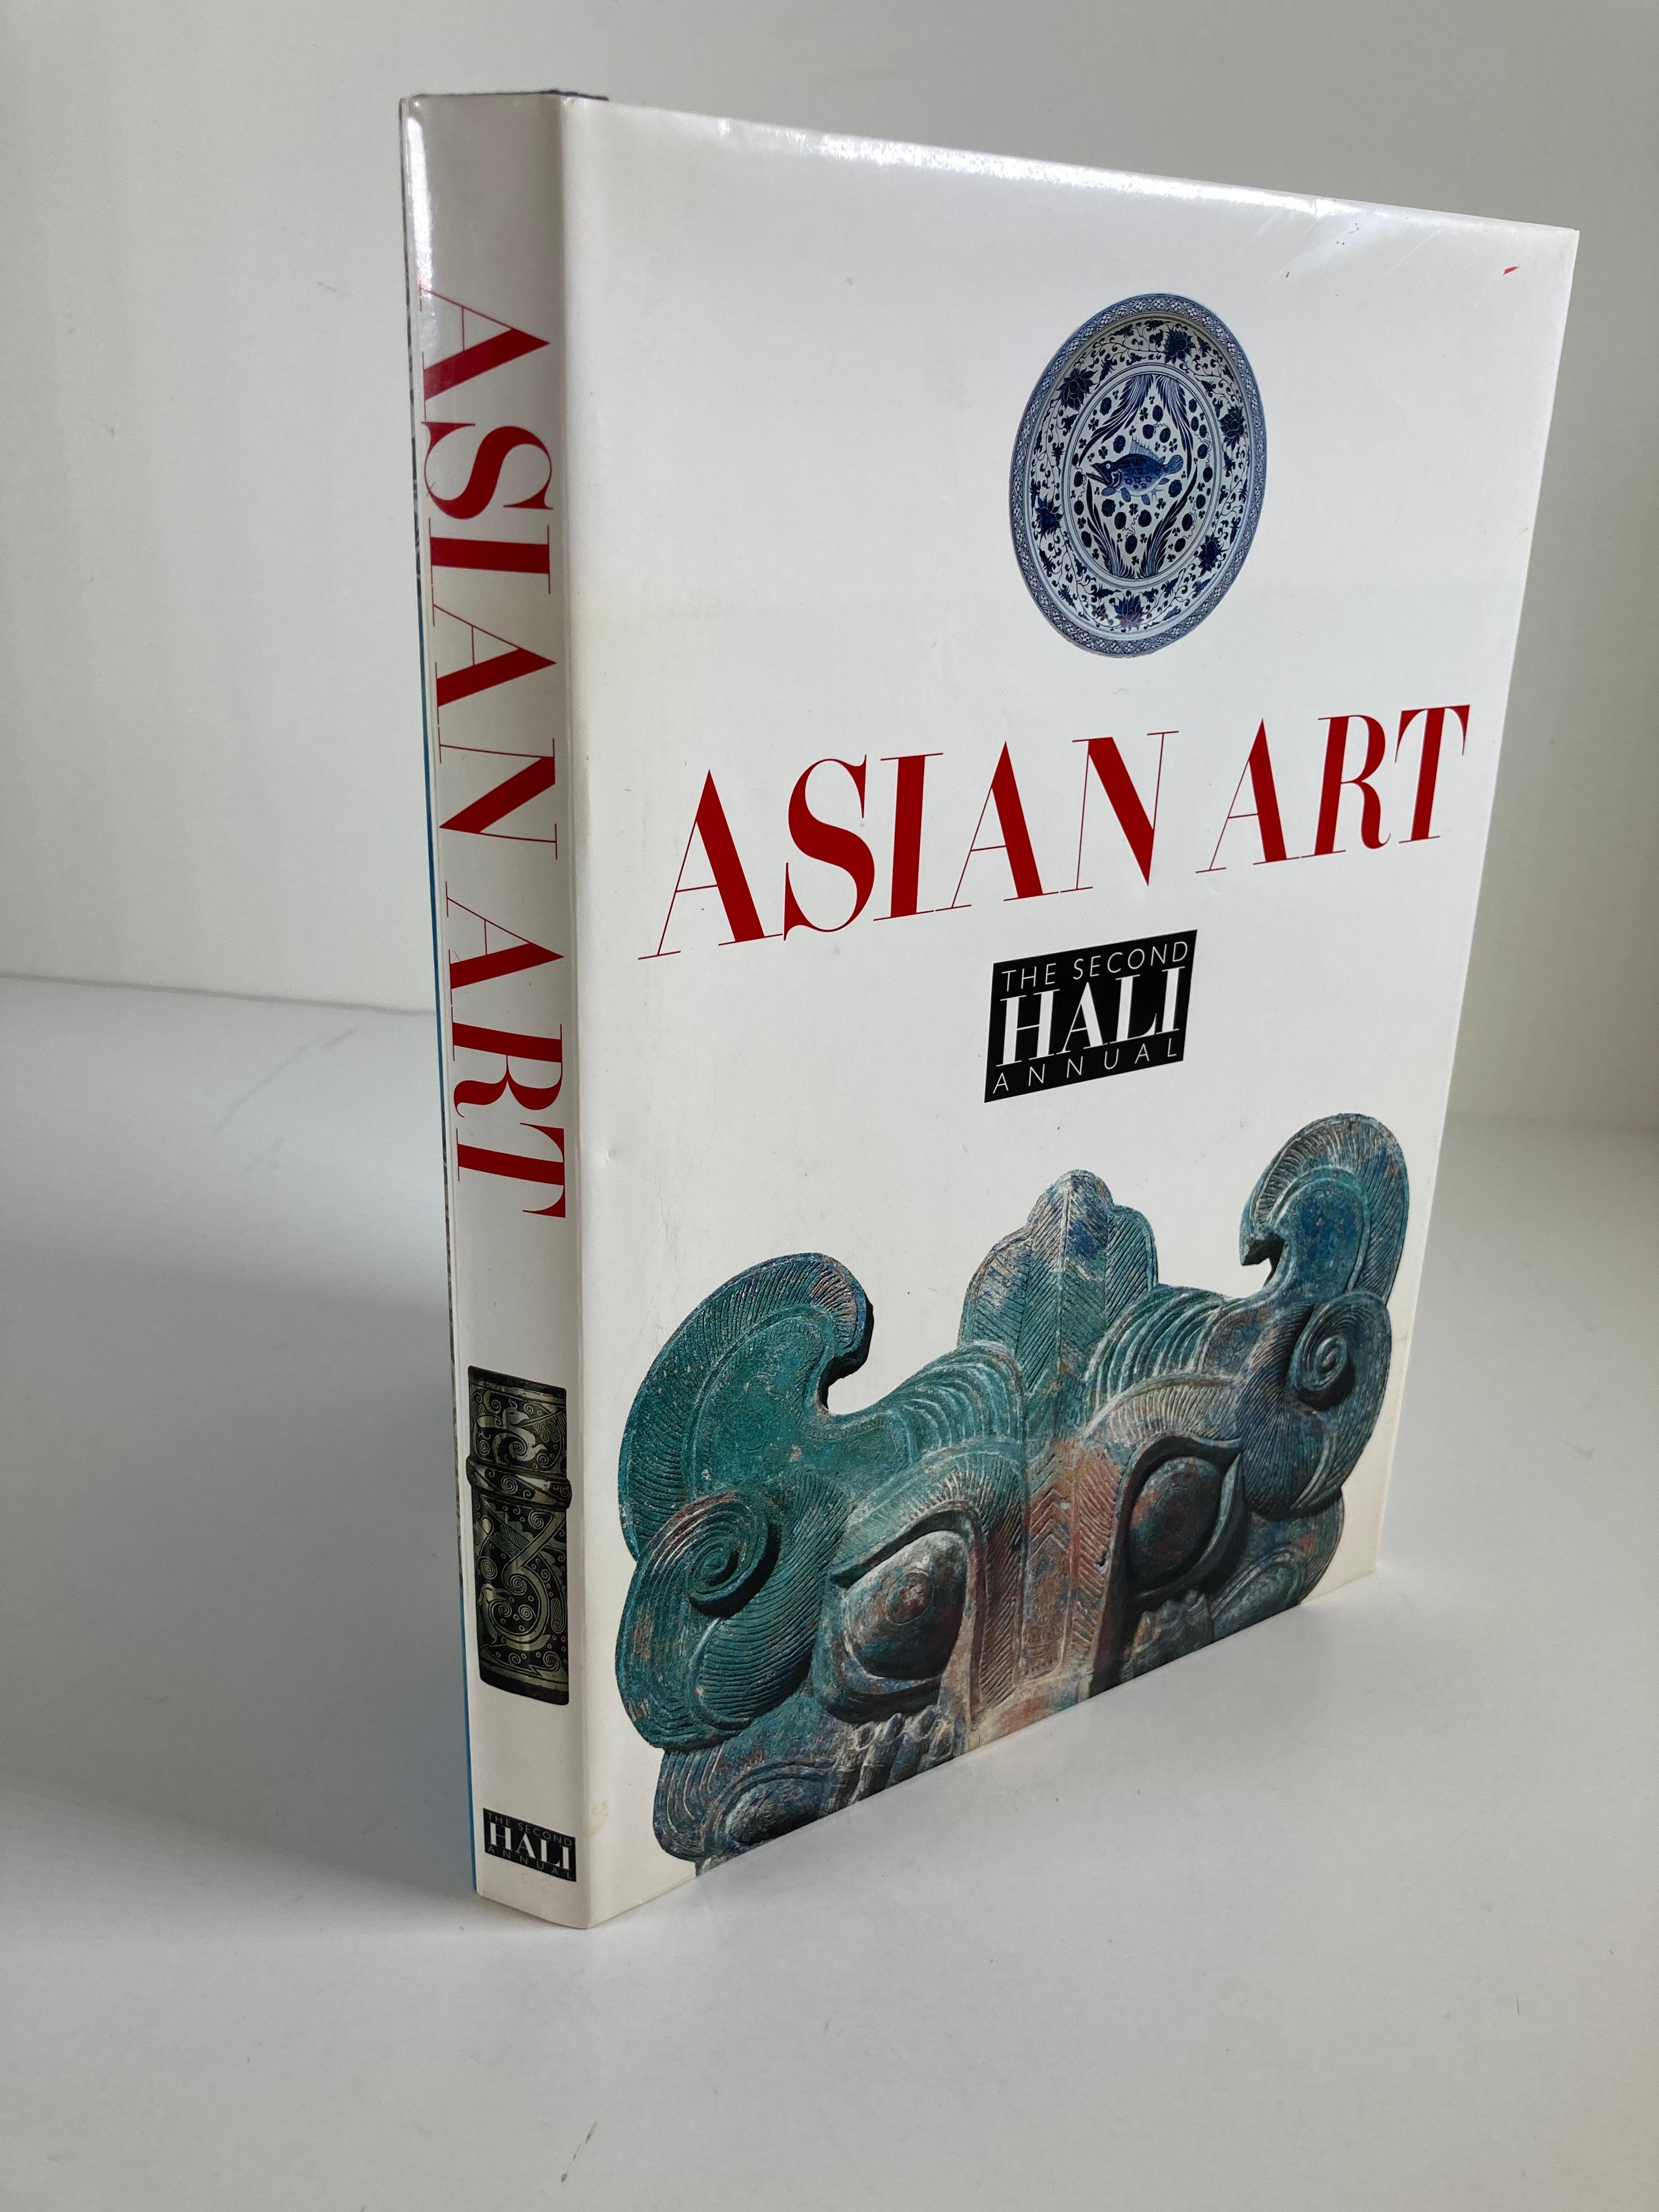 English ASIAN ART, The Second Hali Annual